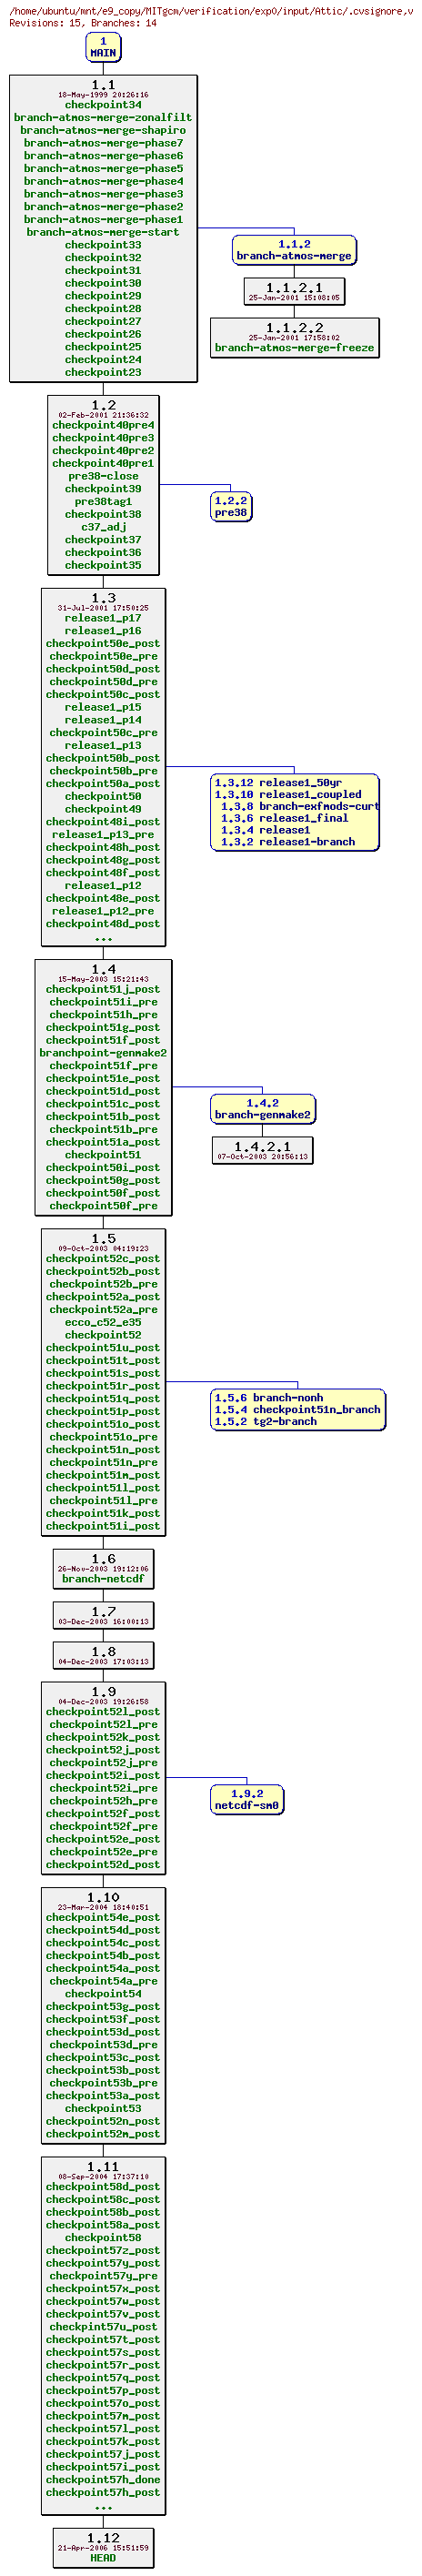 Revisions of MITgcm/verification/exp0/input/.cvsignore